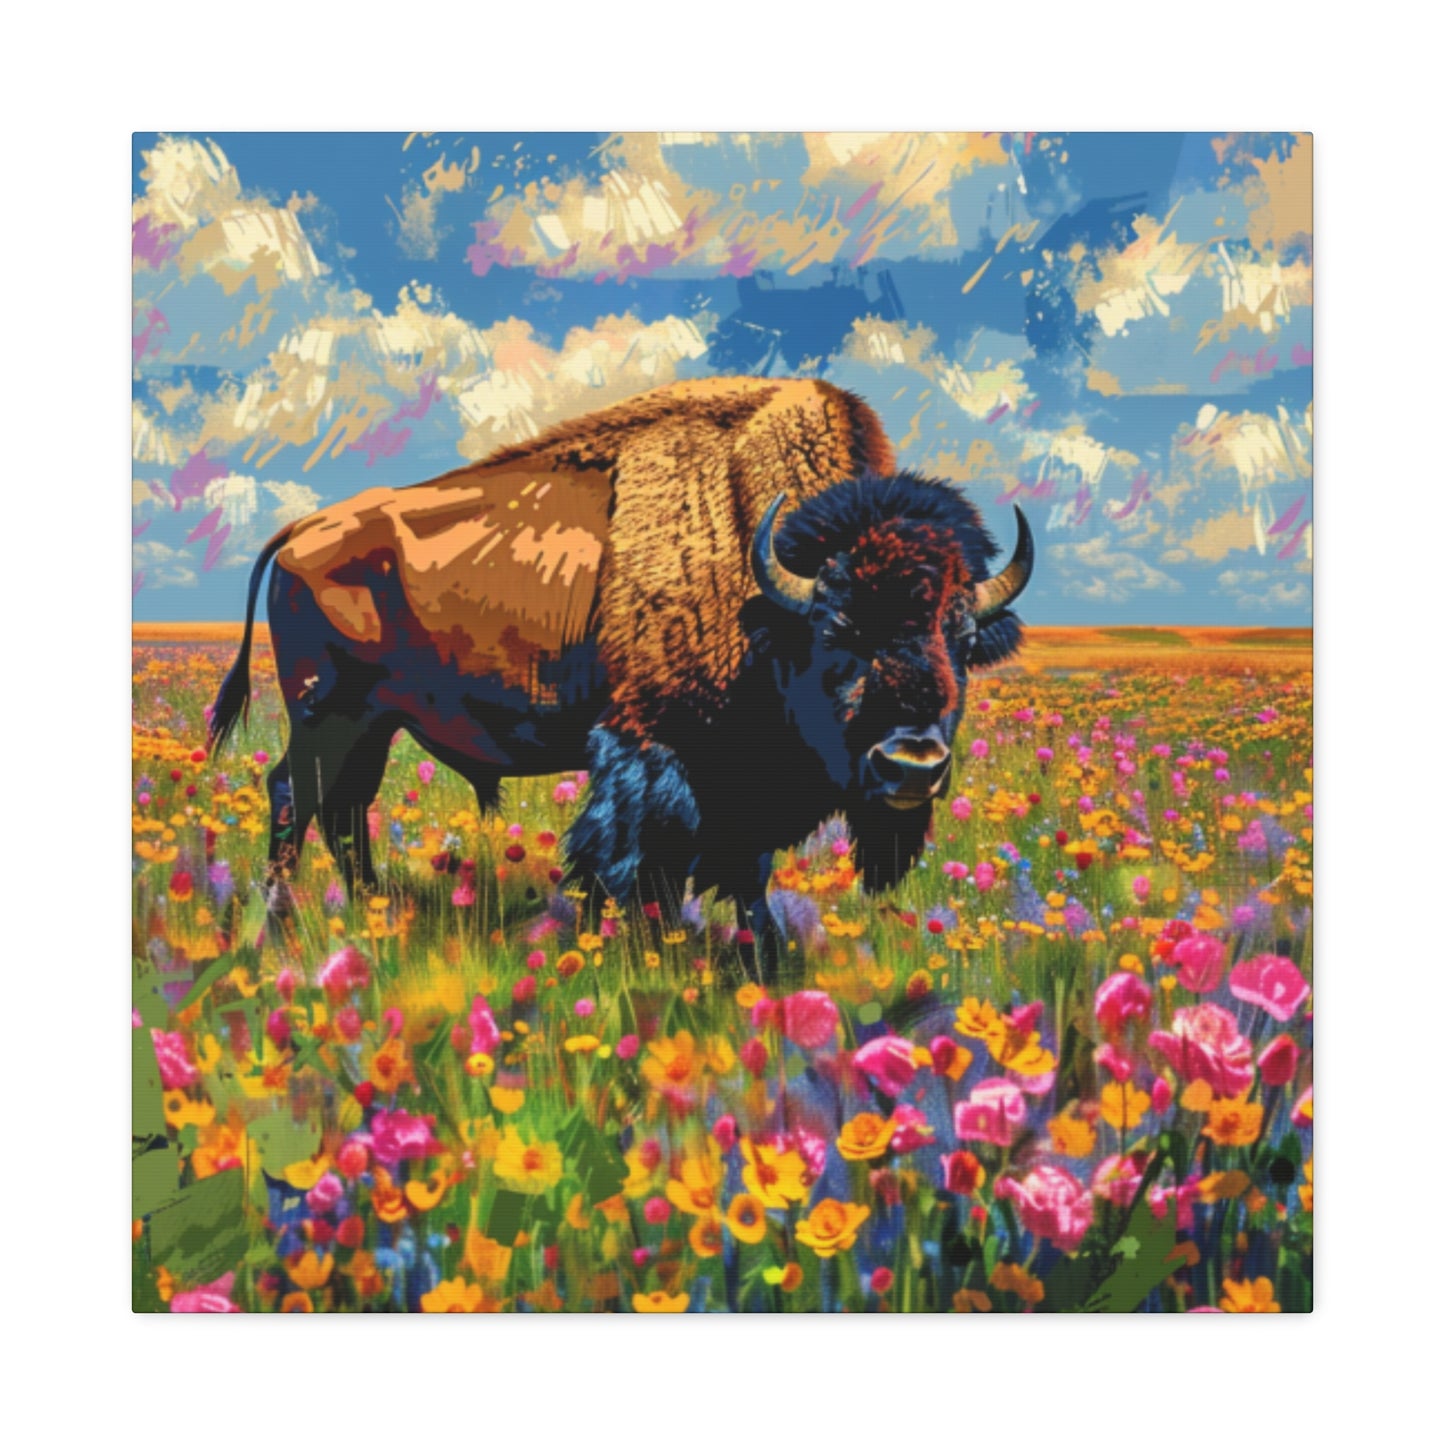 Bison Canvas Gallery Wraps